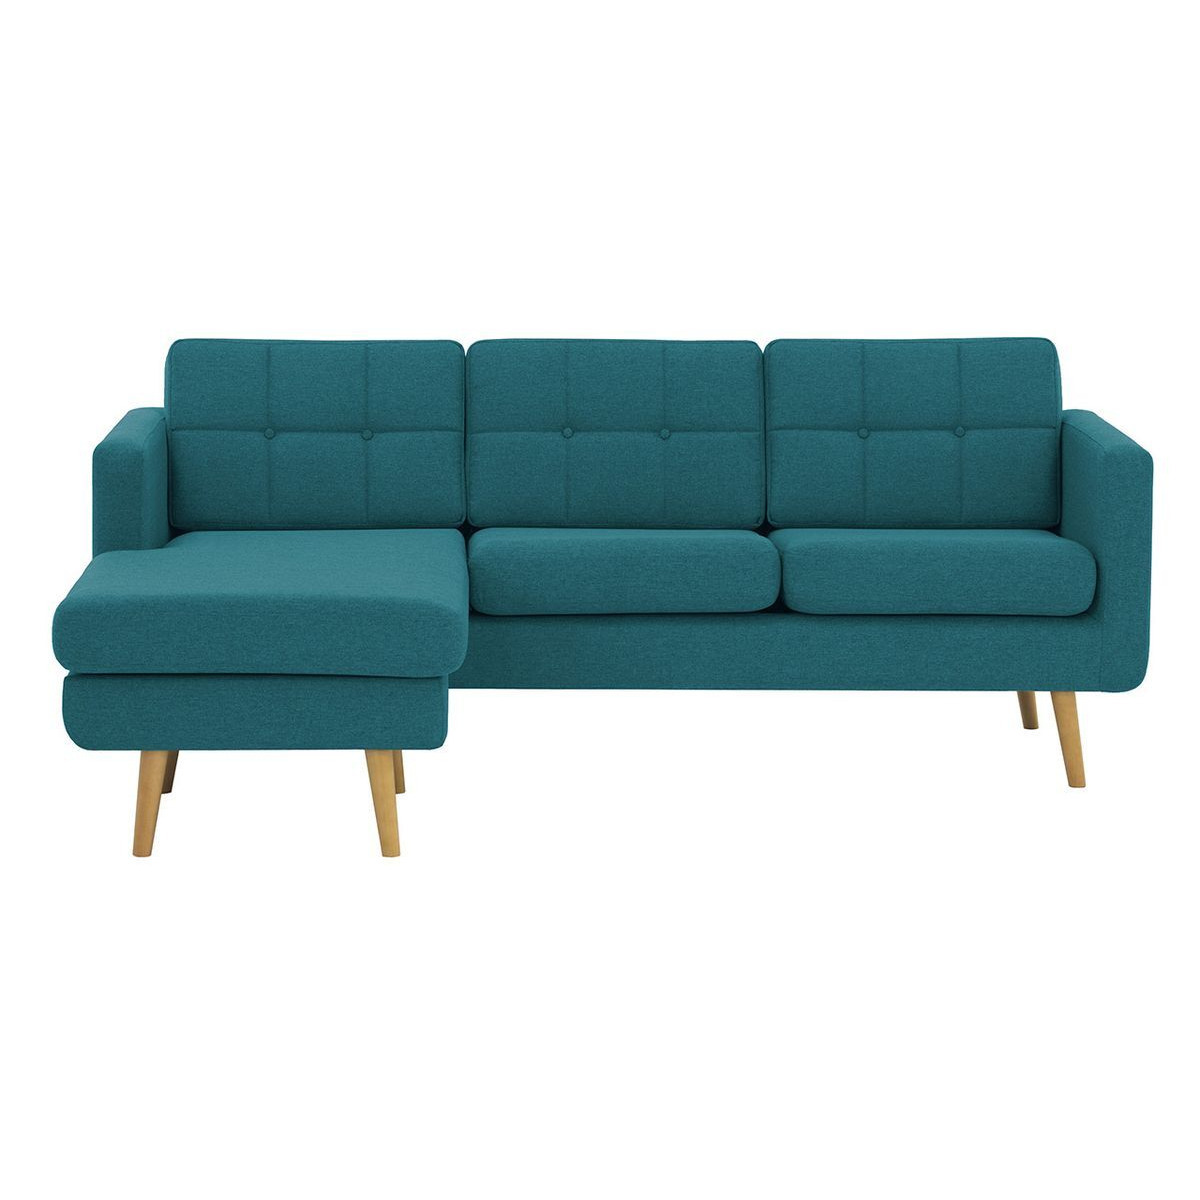 Brest Left Hand Corner Sofa, turquoise - image 1